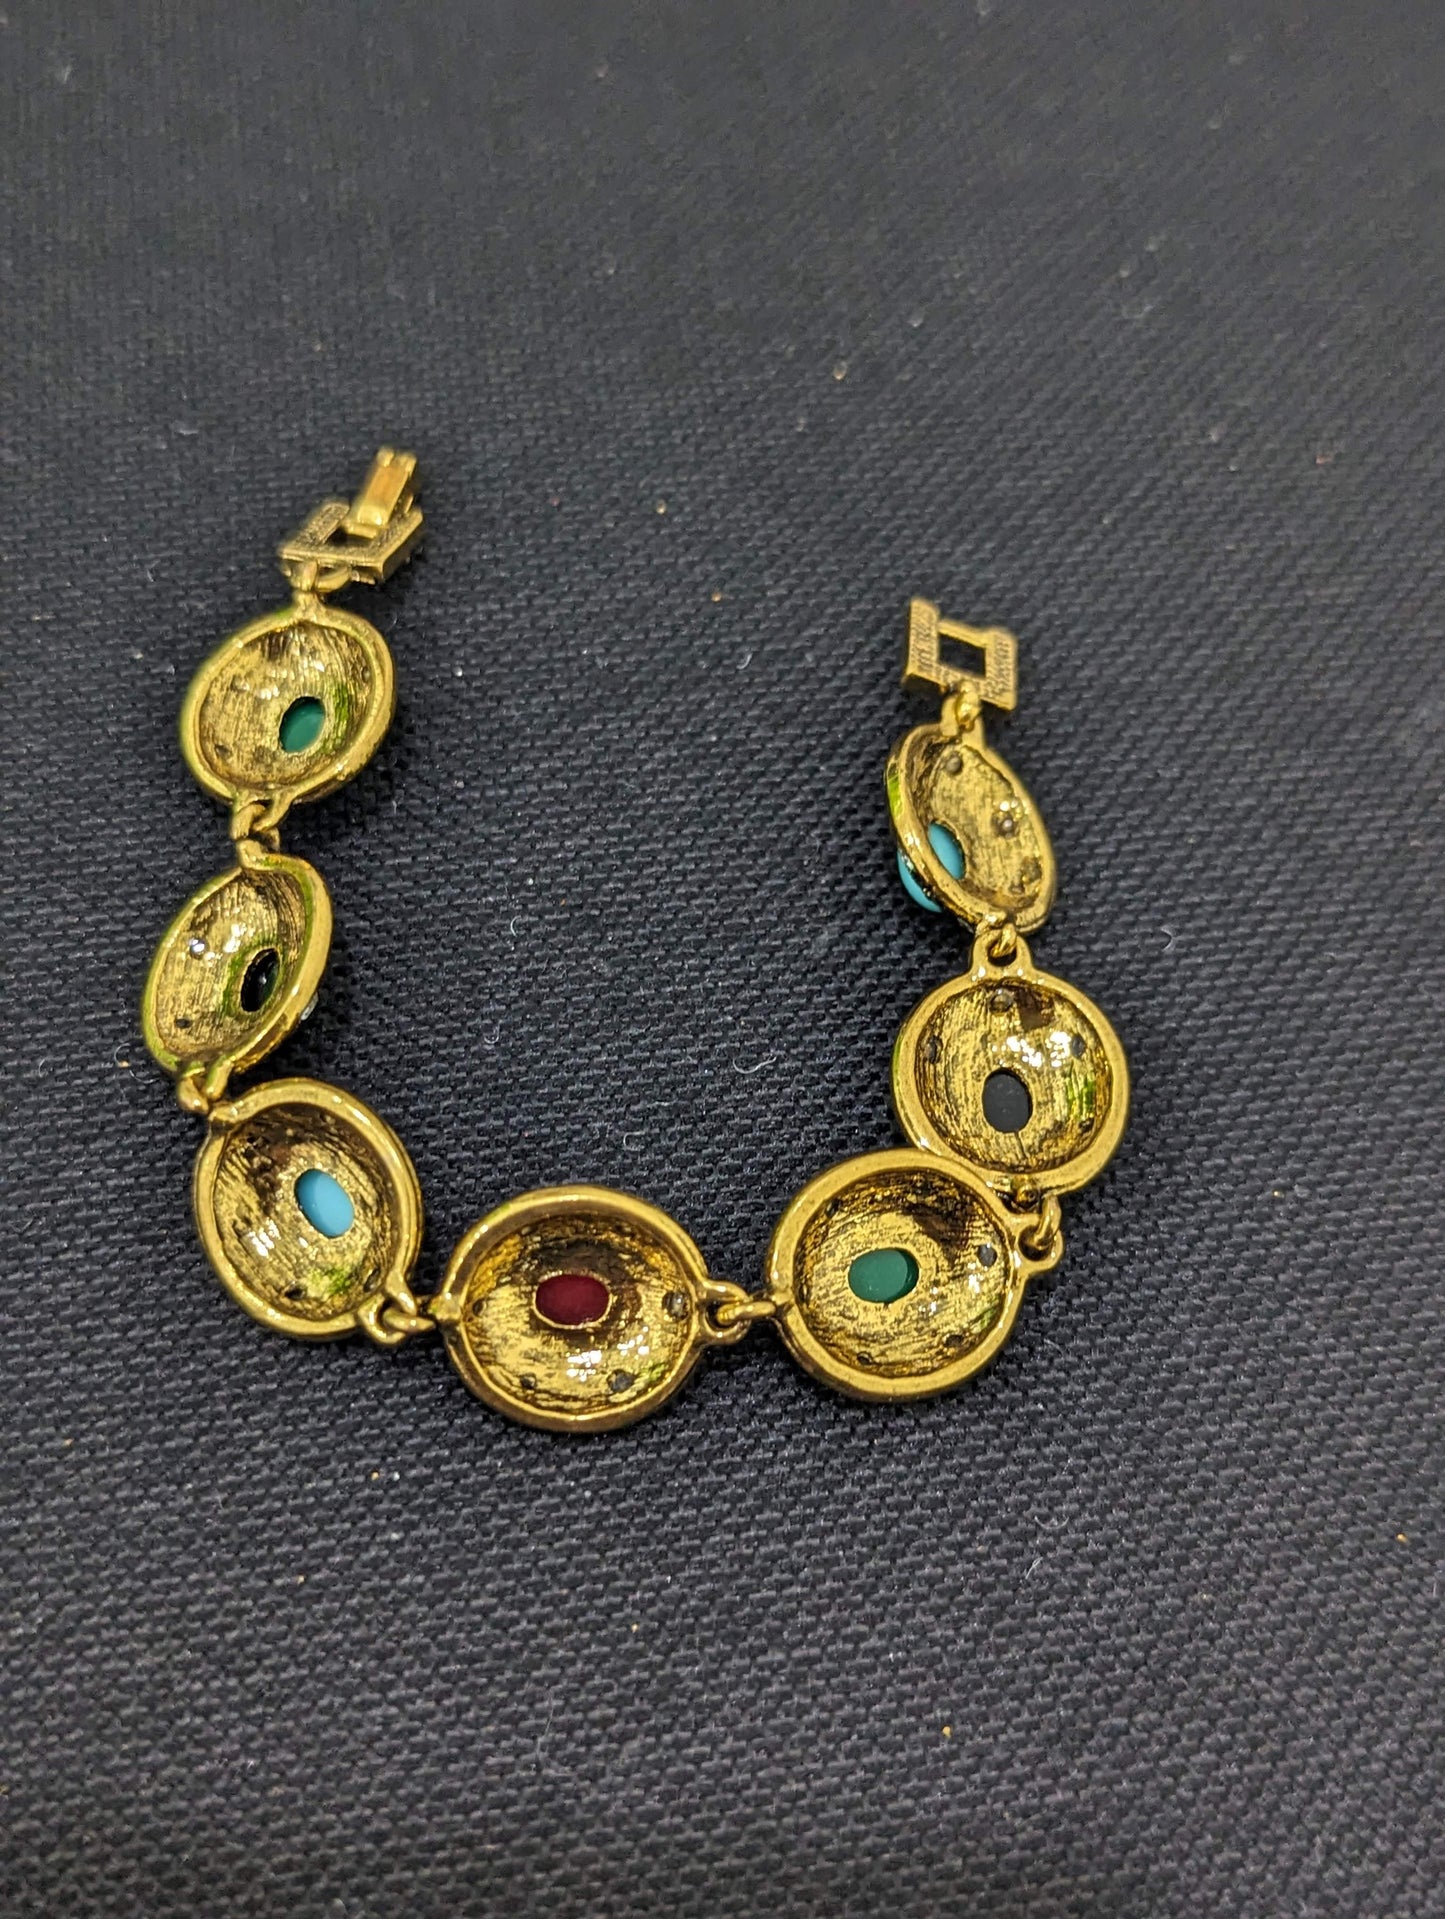 Antique gold Colorful Oval Bracelet